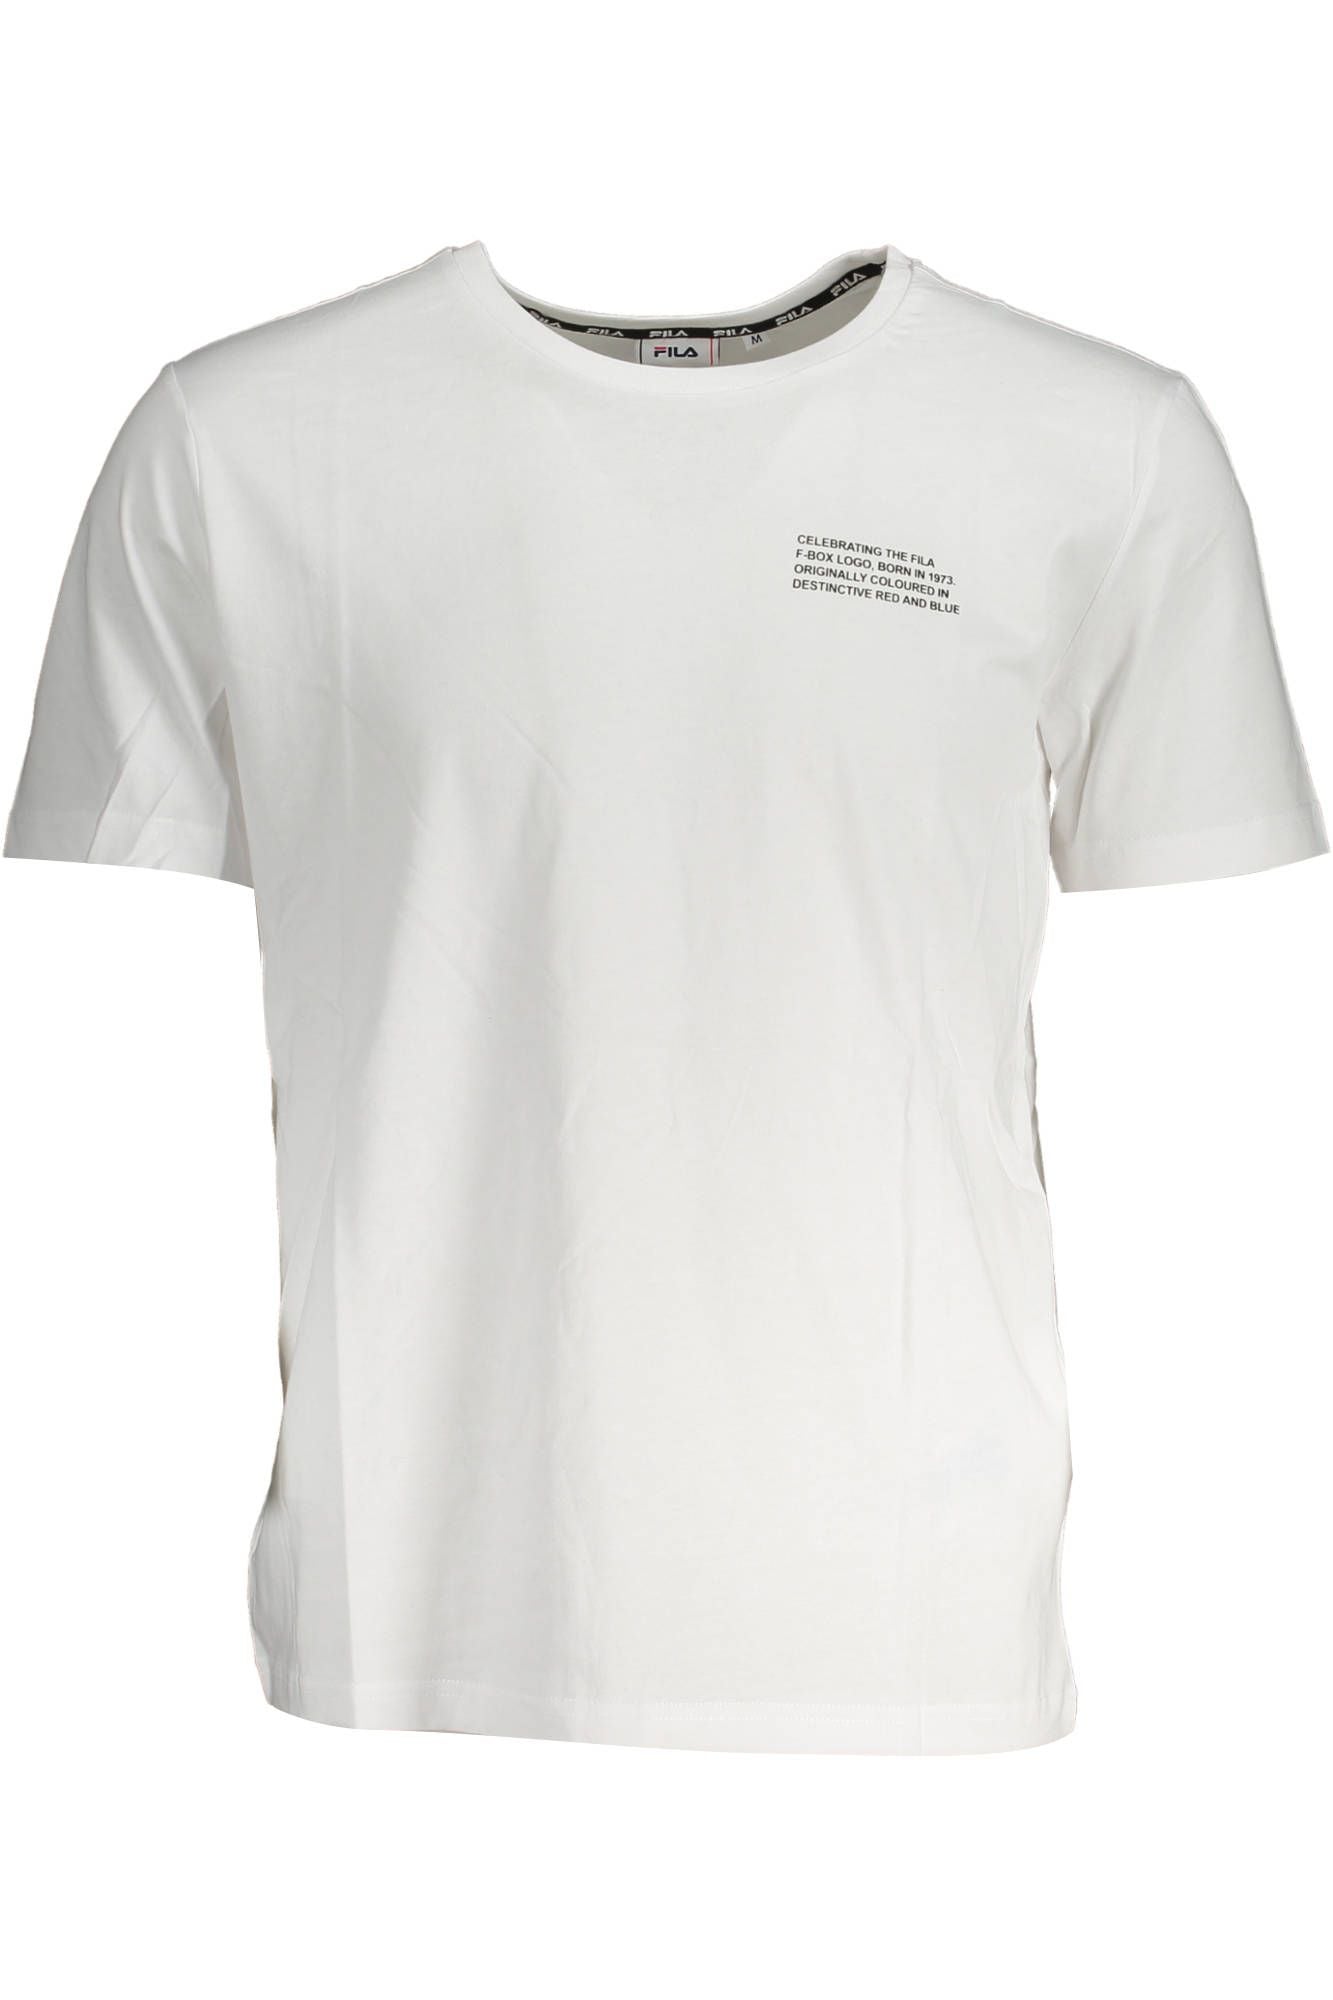 Fila White Cotton T-Shirt